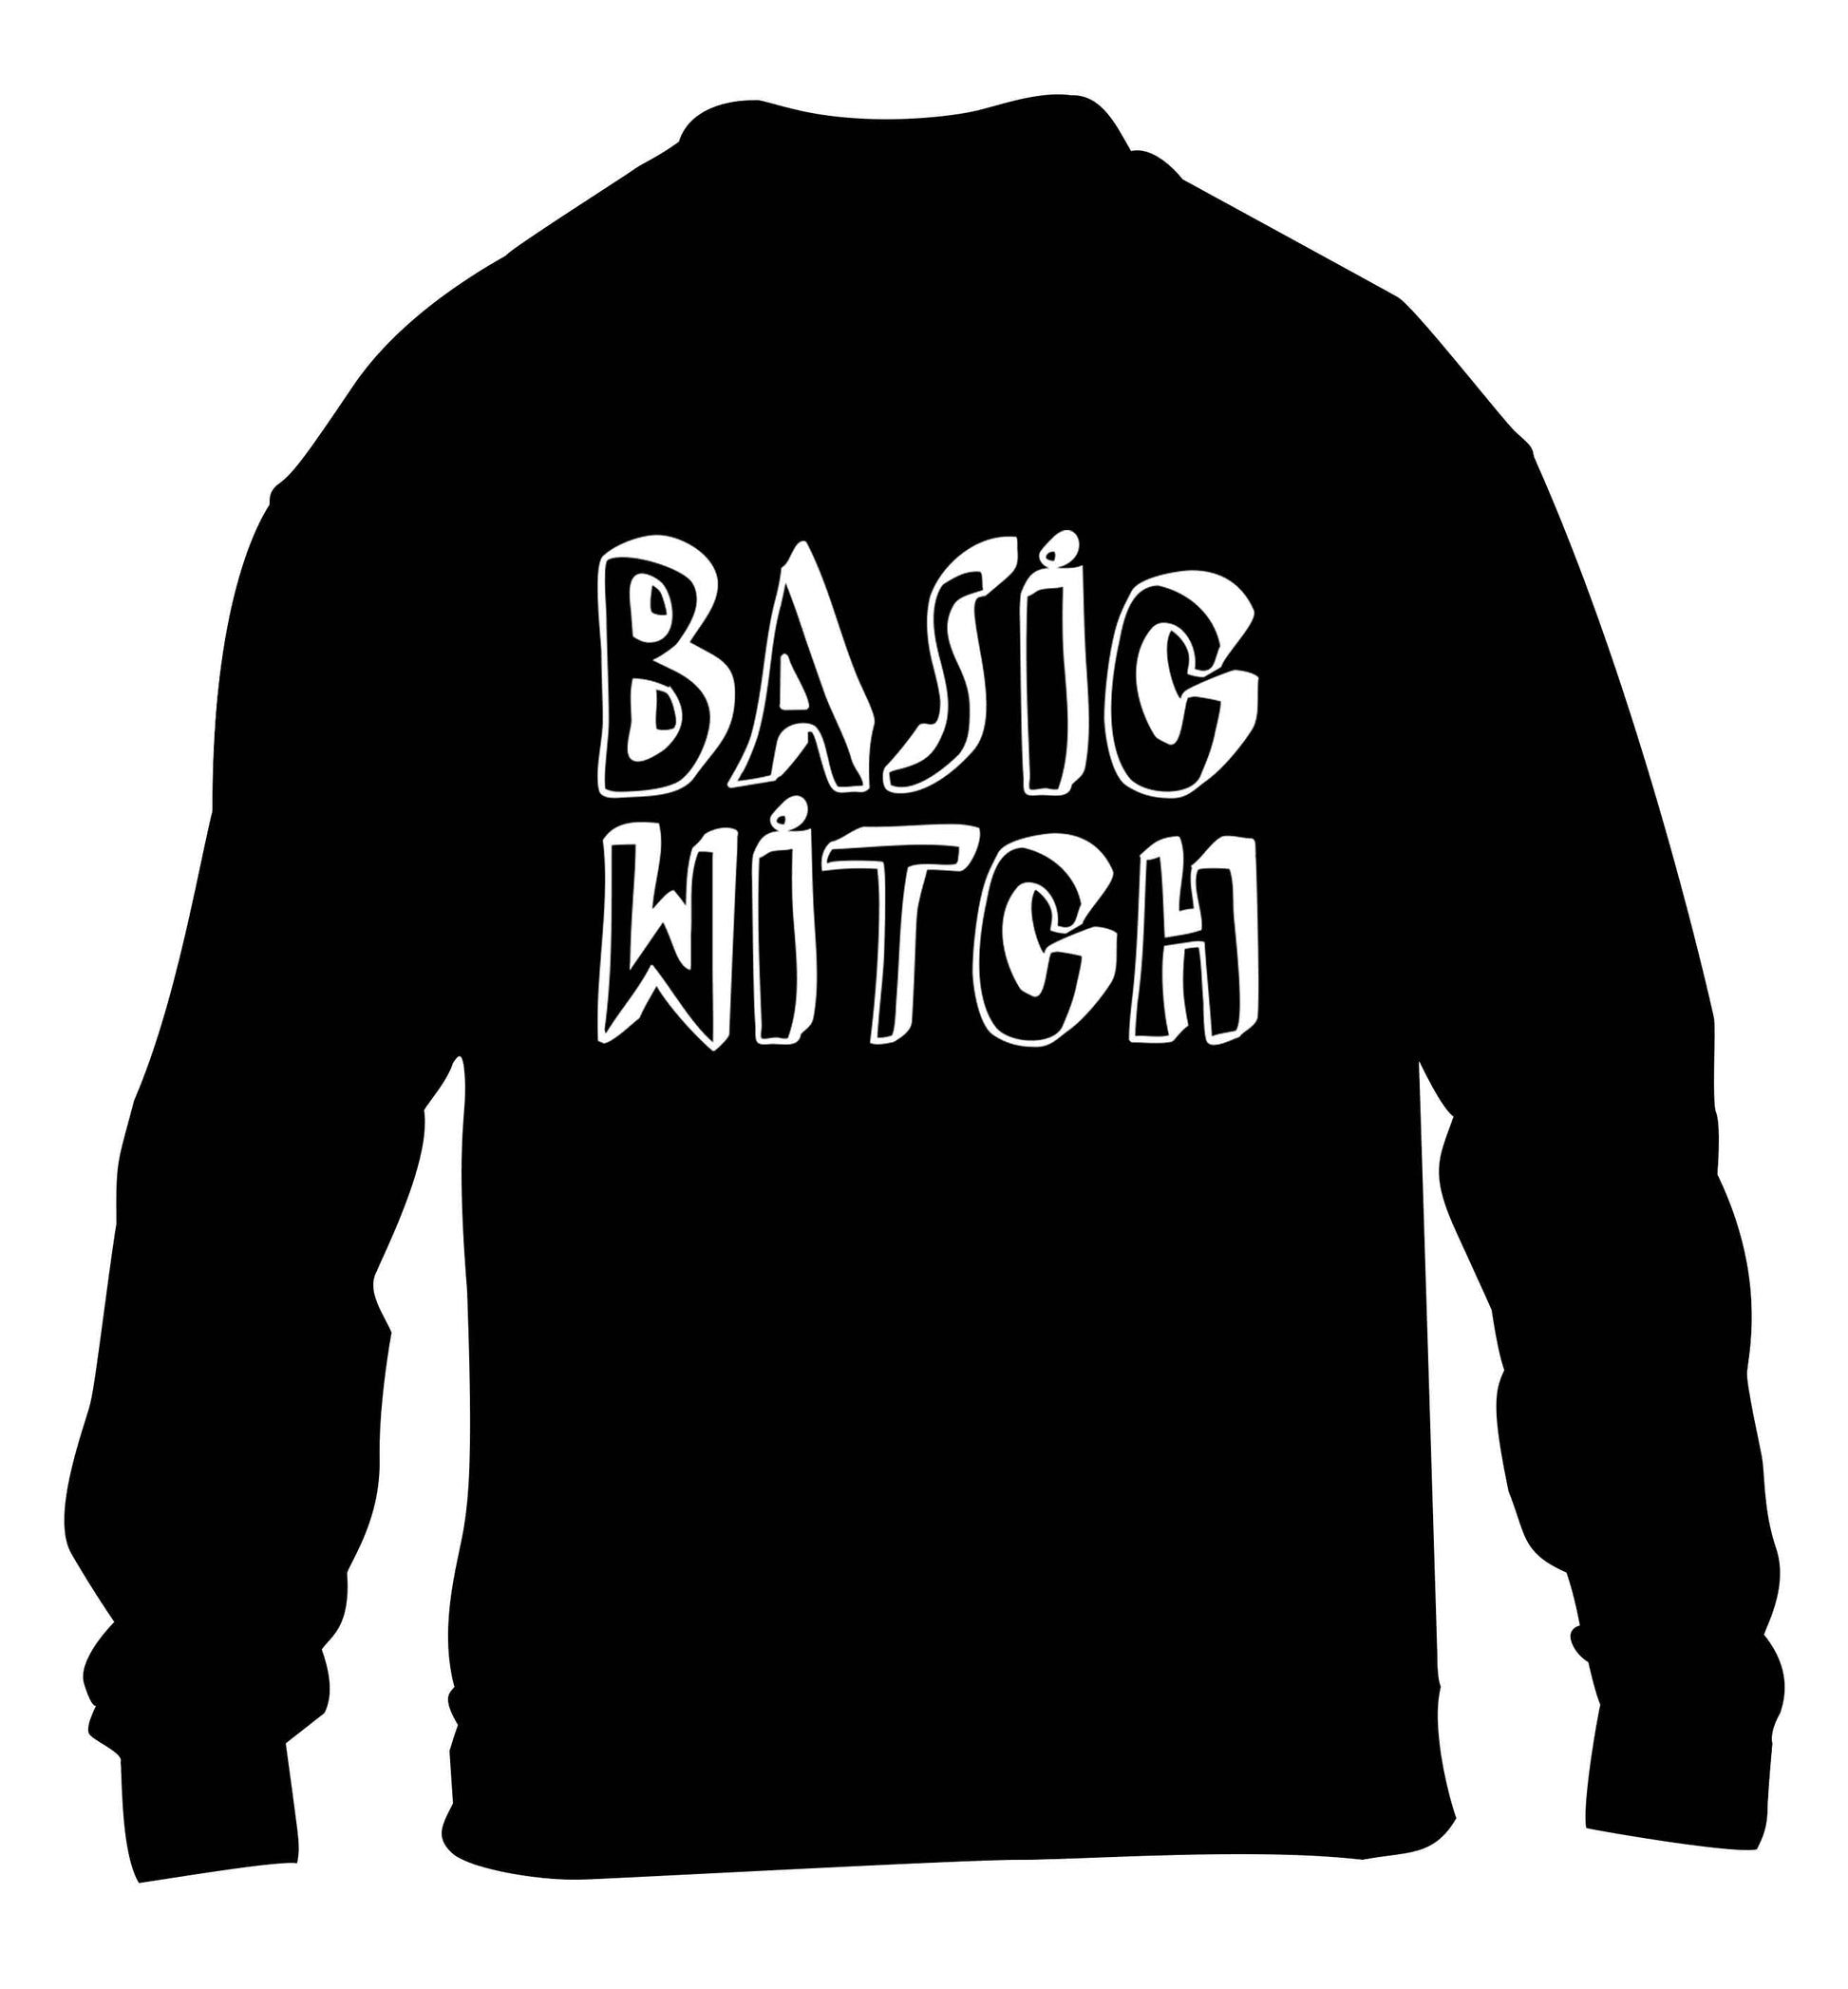 Basic witch children's black sweater 12-13 Years